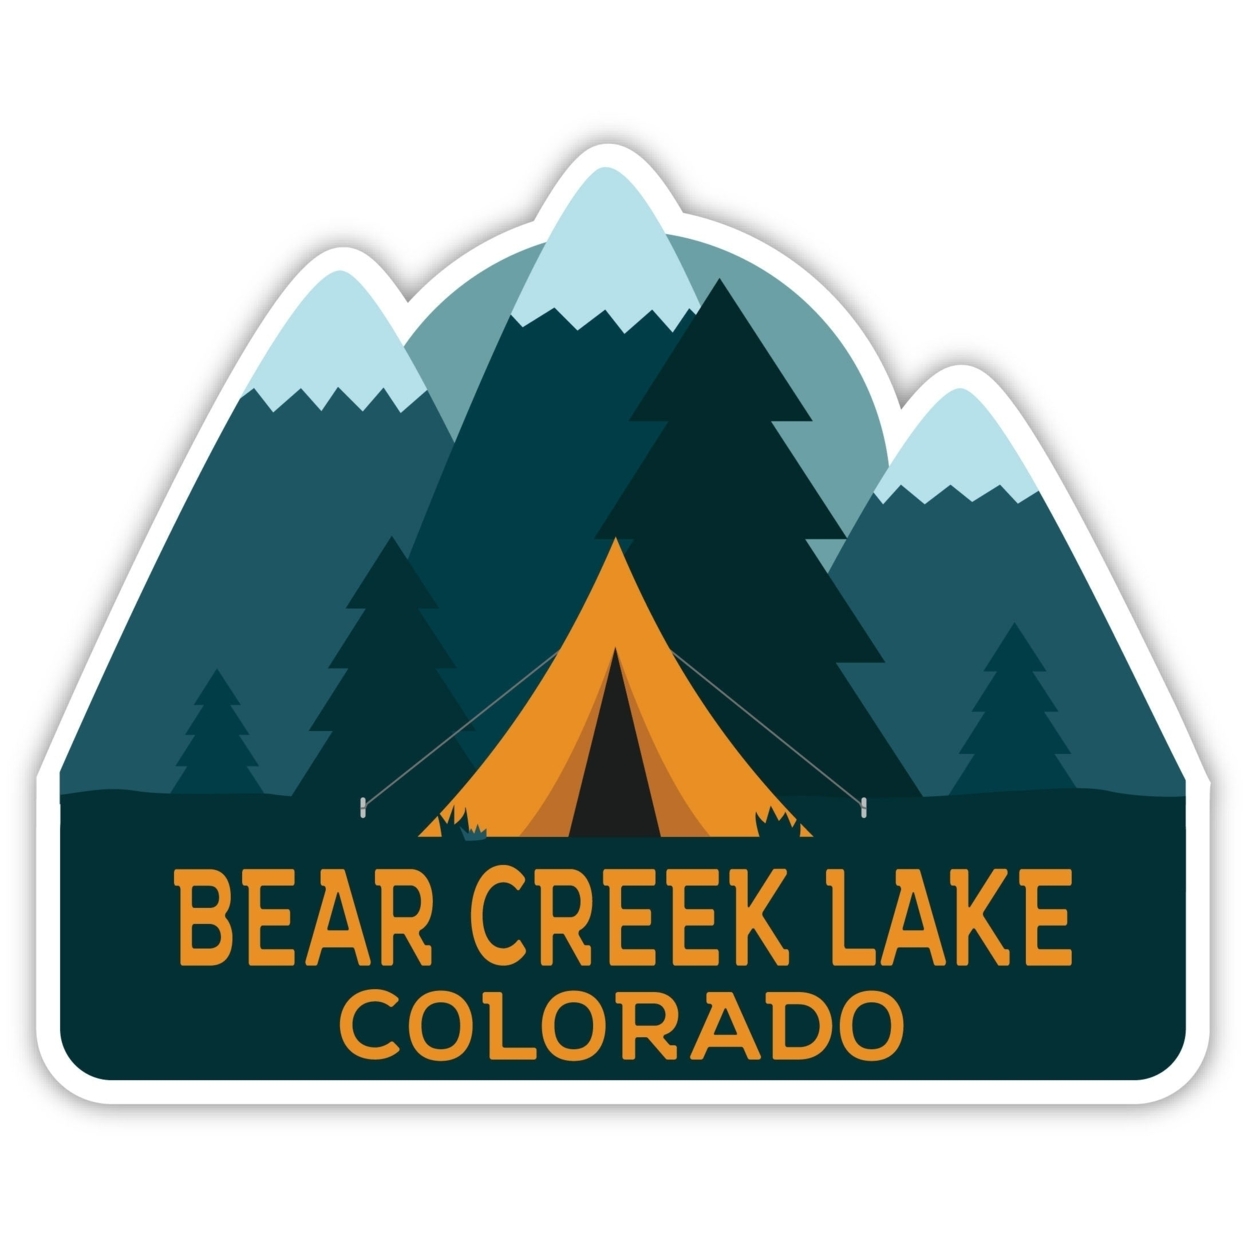 Bear Creek Lake Colorado Souvenir Decorative Stickers (Choose Theme And Size) - 4-Pack, 6-Inch, Tent